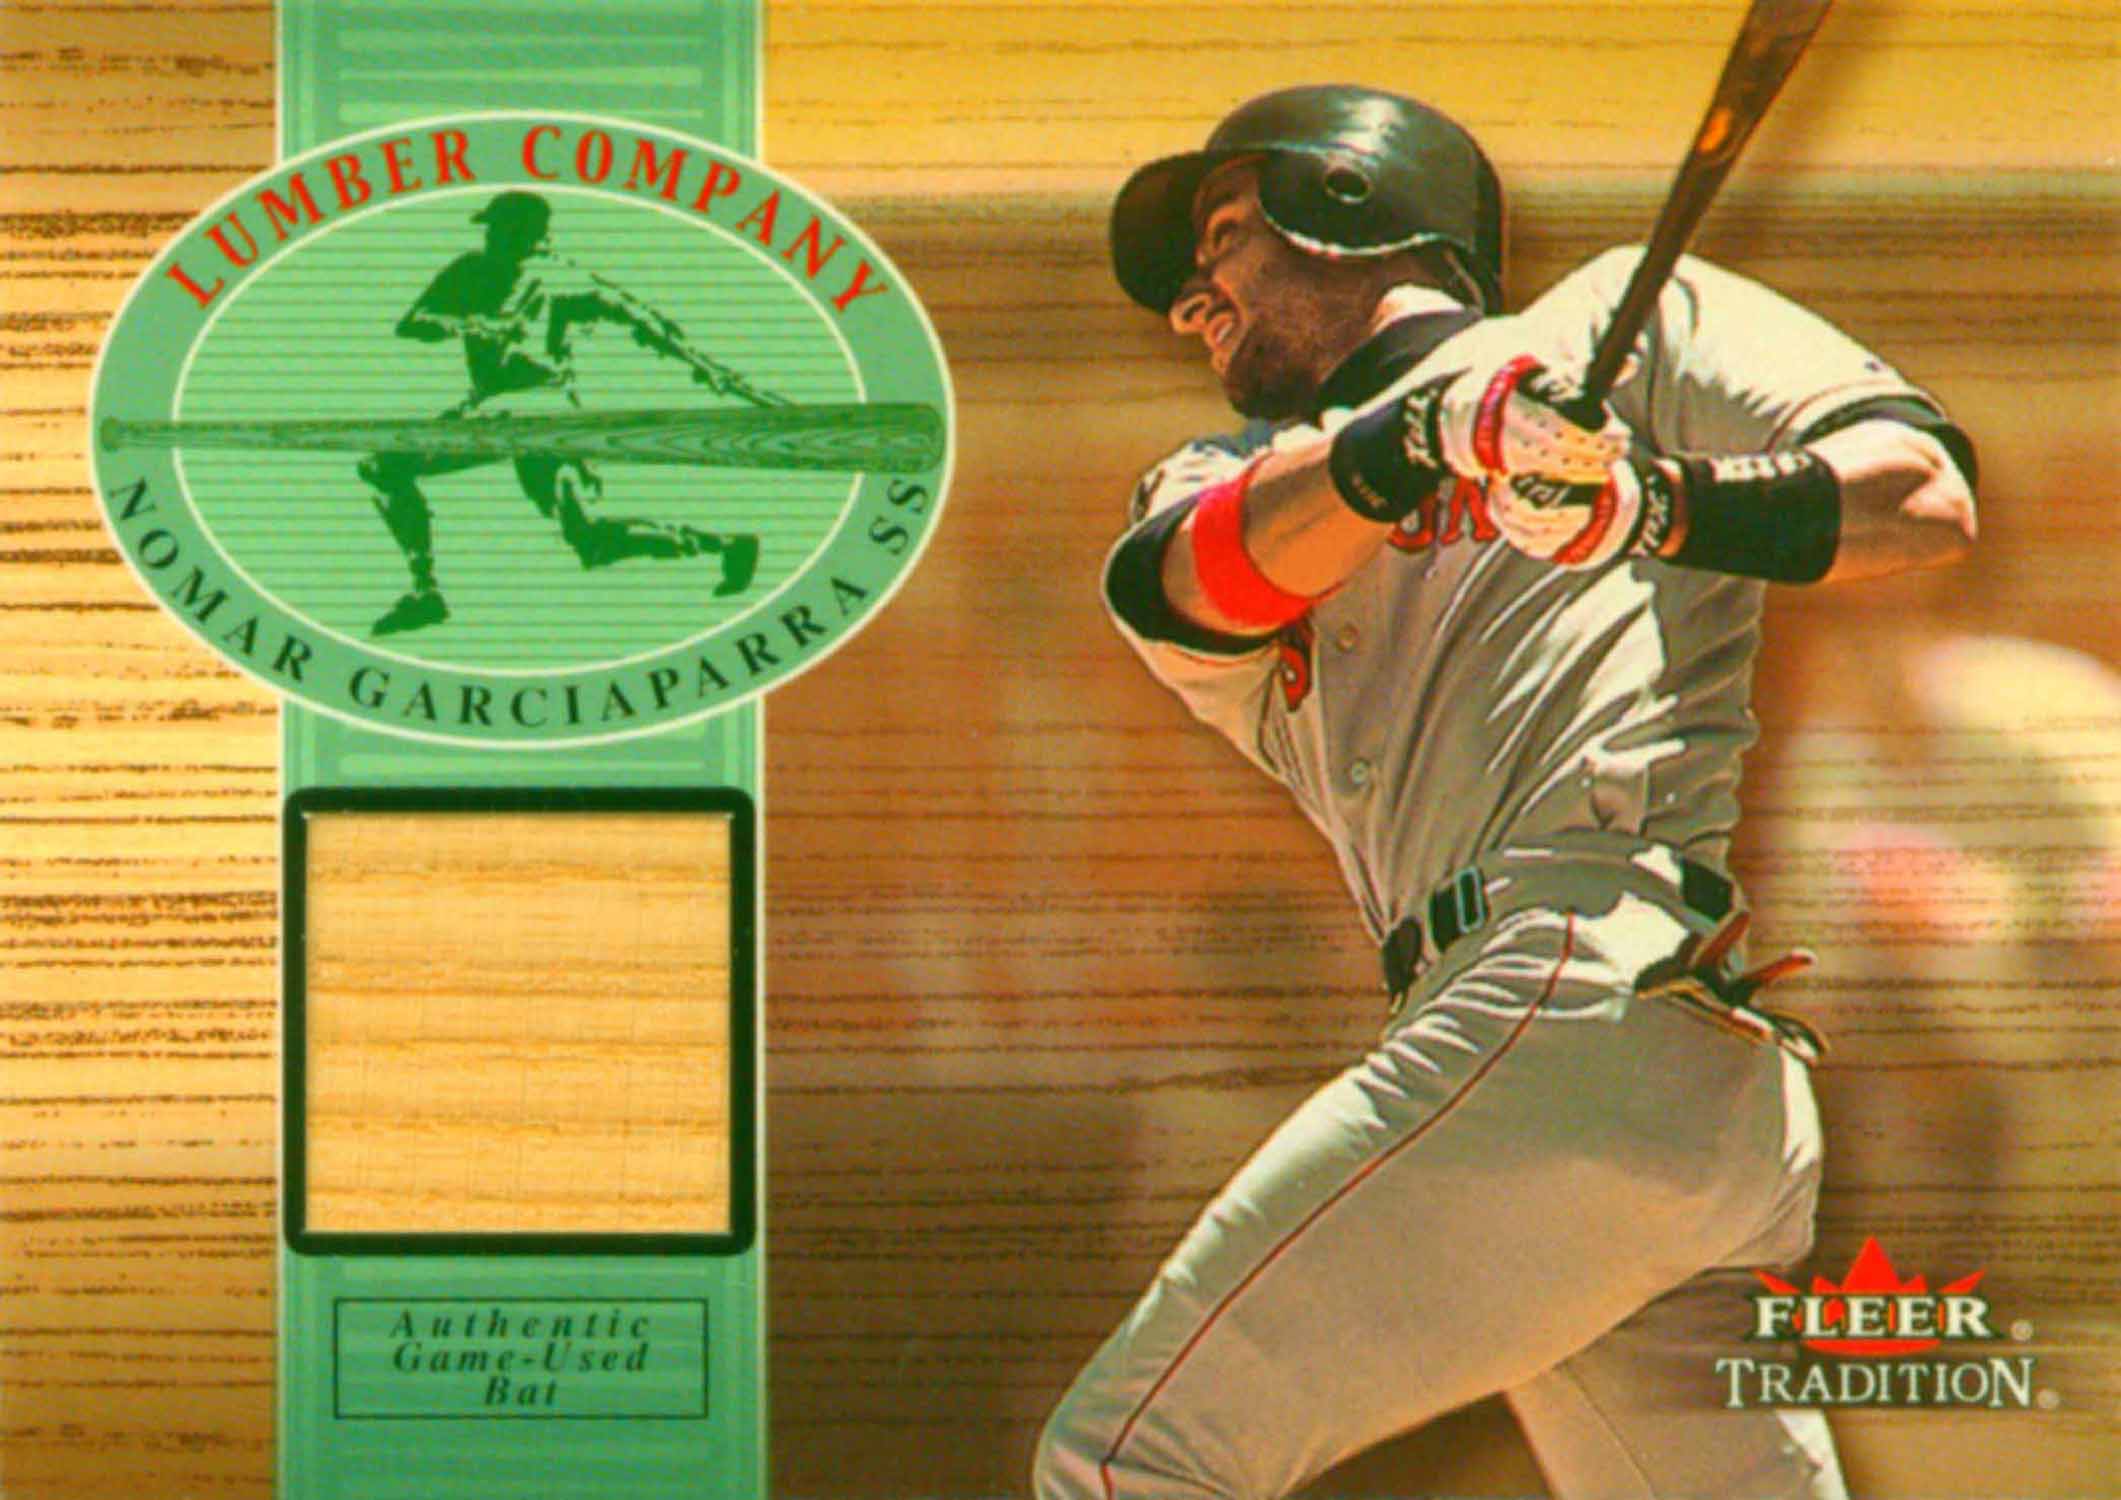 2002 Fleer Tradition Lumber Company Game Bat